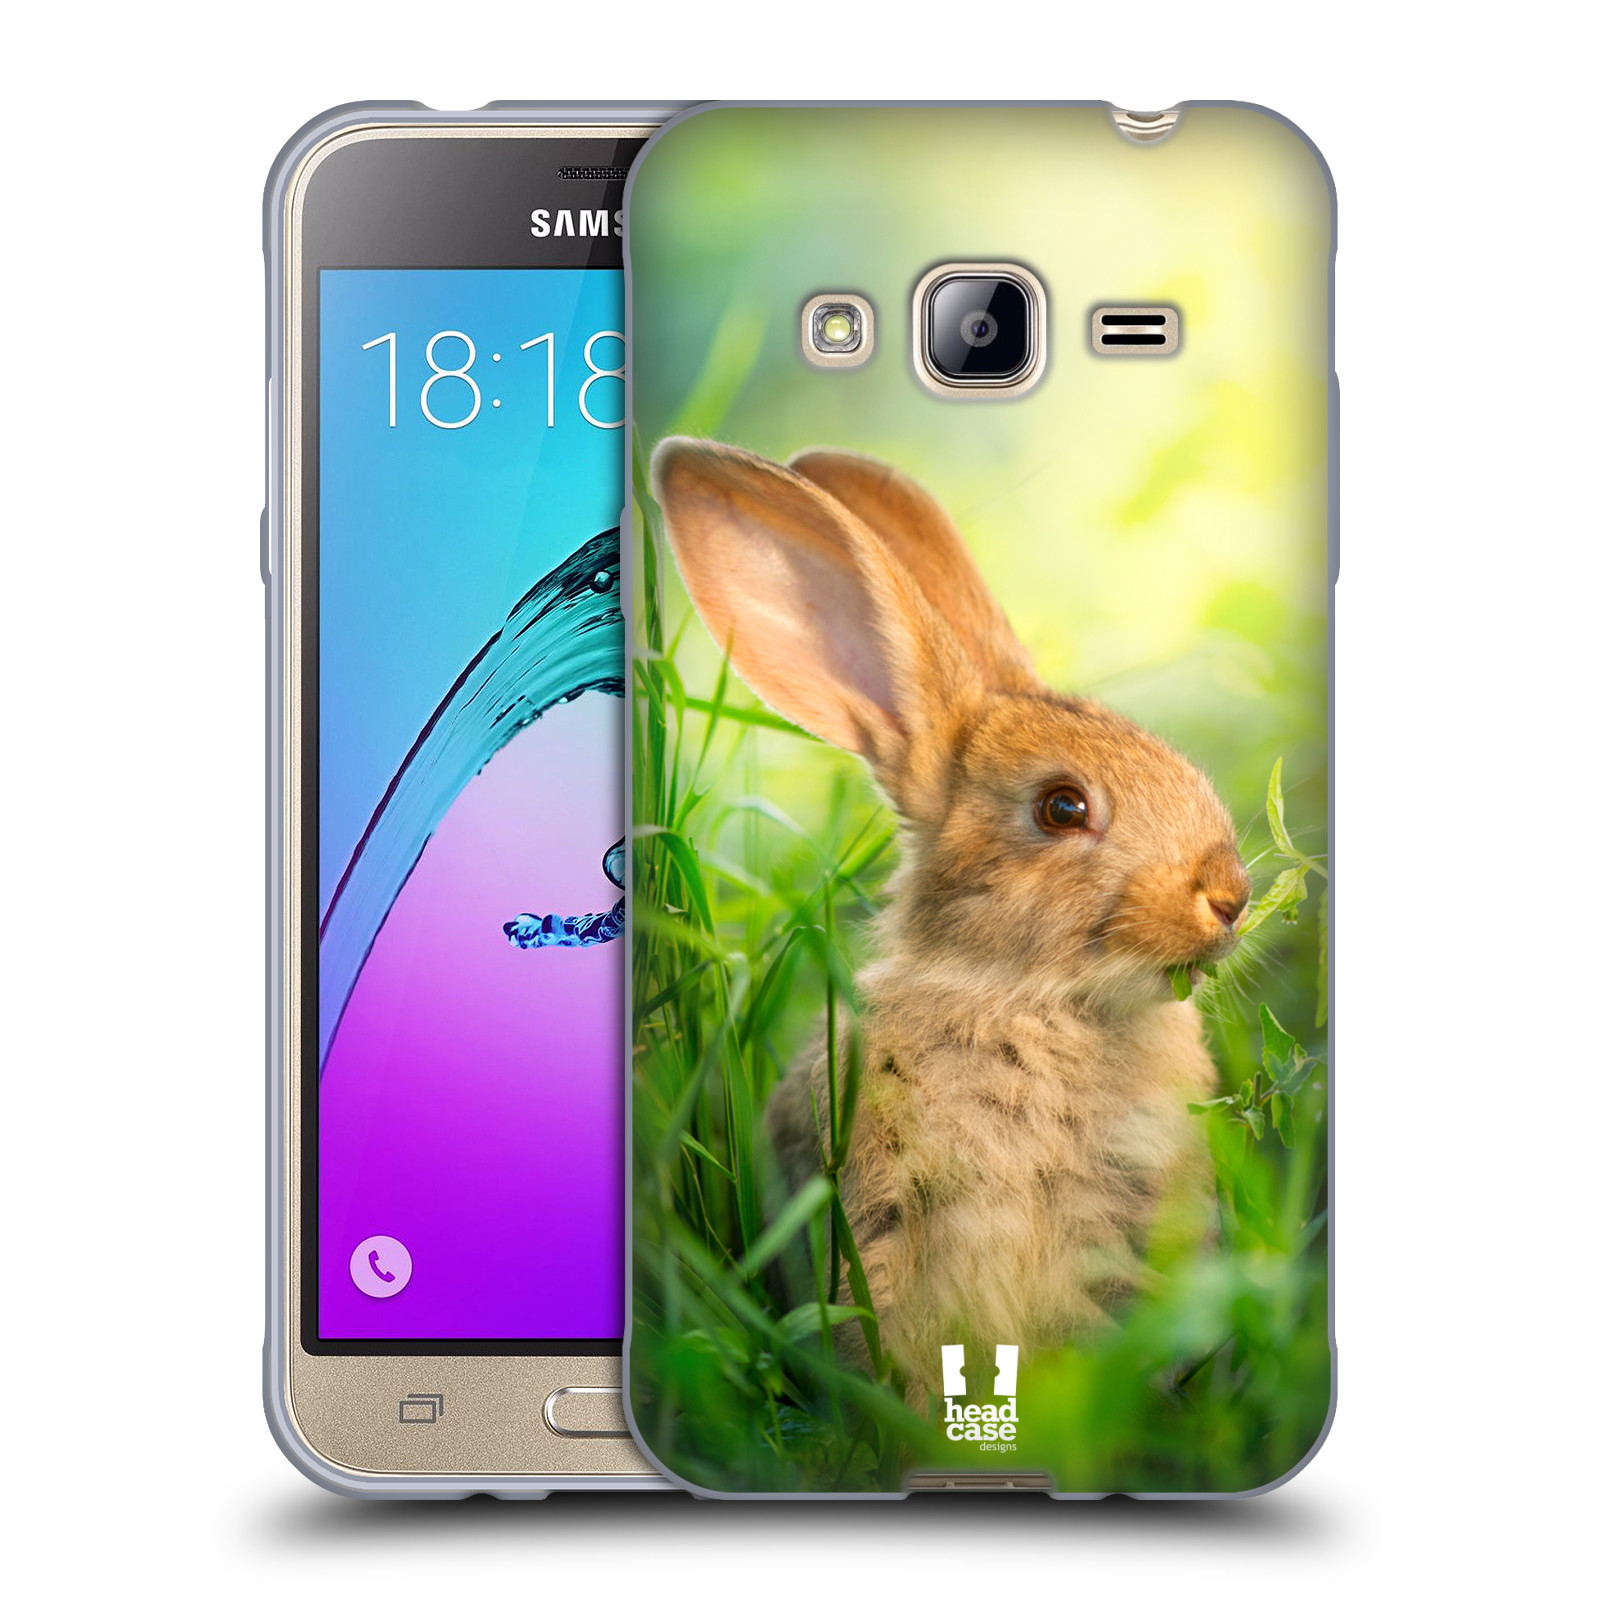 HEAD CASE silikonový obal na mobil Samsung Galaxy J3, J3 2016 vzor Divočina, Divoký život a zvířata foto ZAJÍČEK V TRÁVĚ ZELENÁ